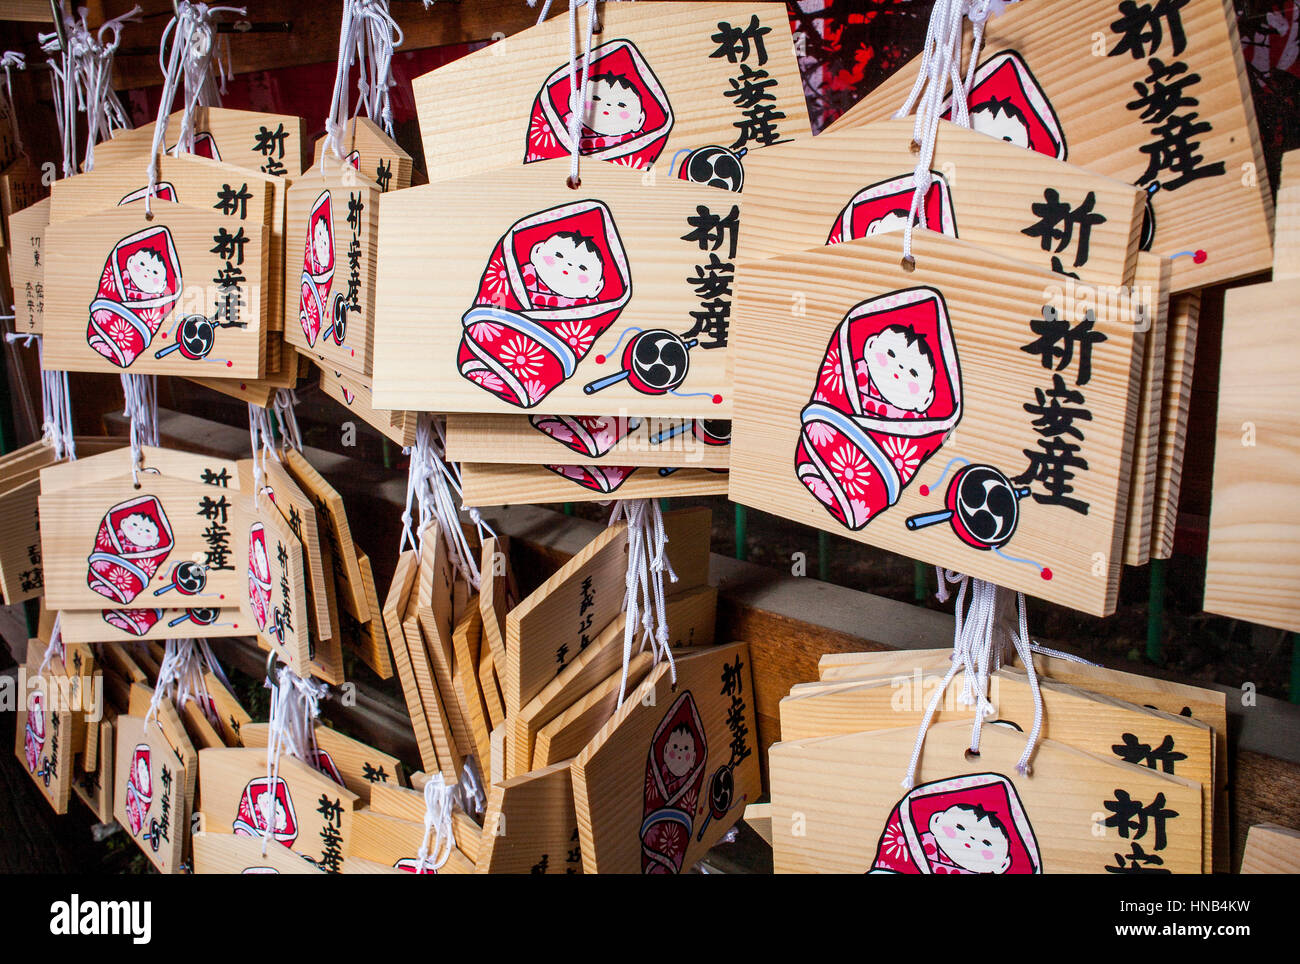 Temple, Wishing plates, desired on wood plates, at Toshogu Shrine, Hiroshima, Japan Stock Photo